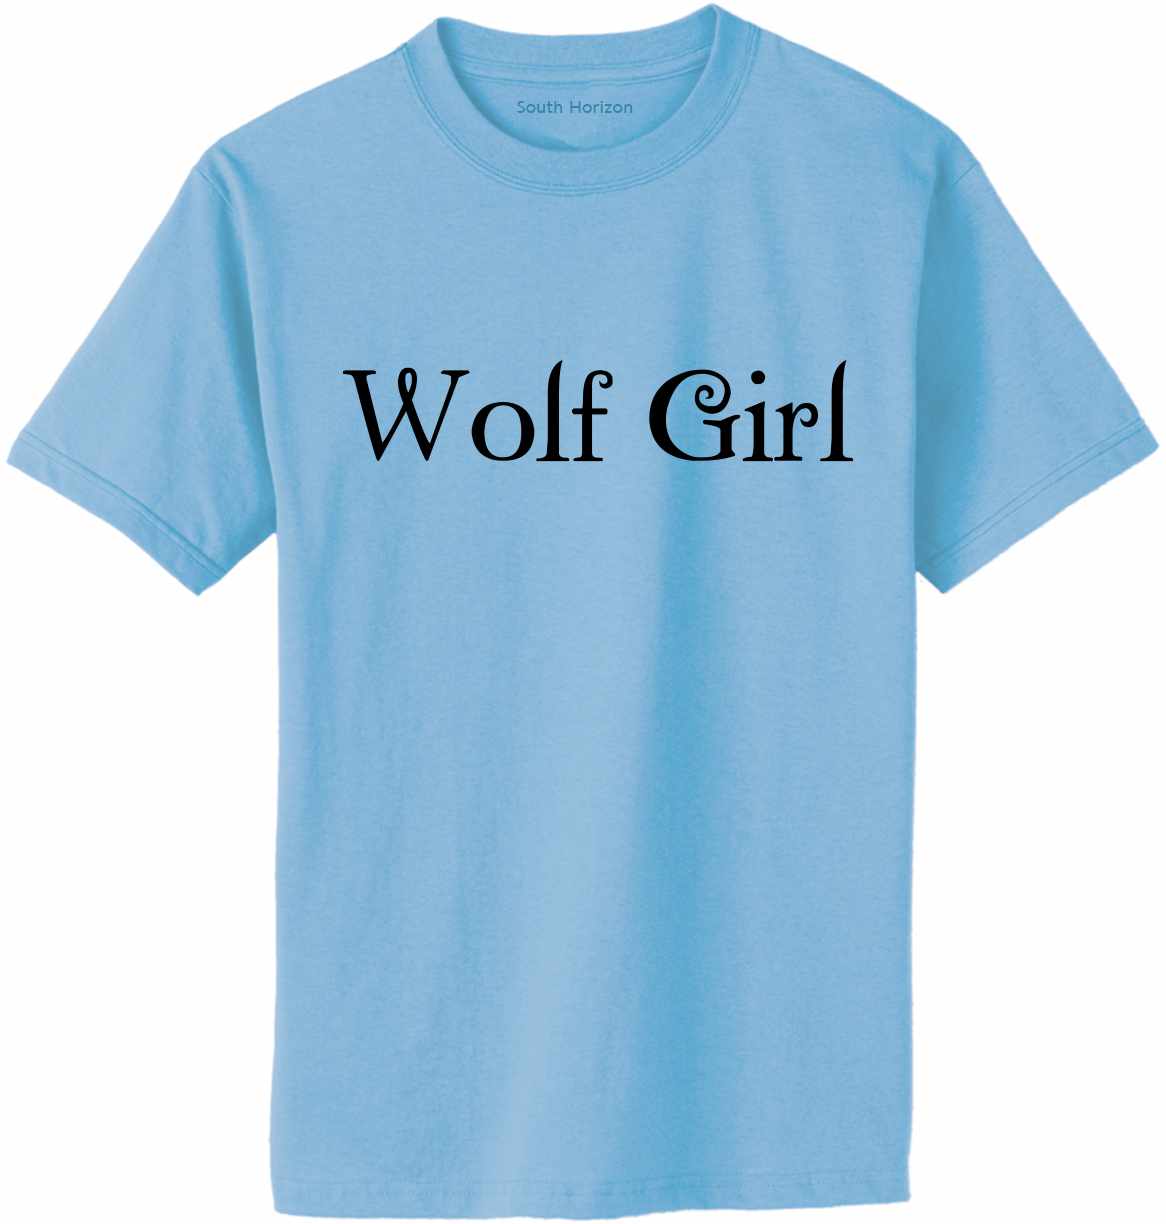 Wolf Girl Adult T-Shirt (#526-1)